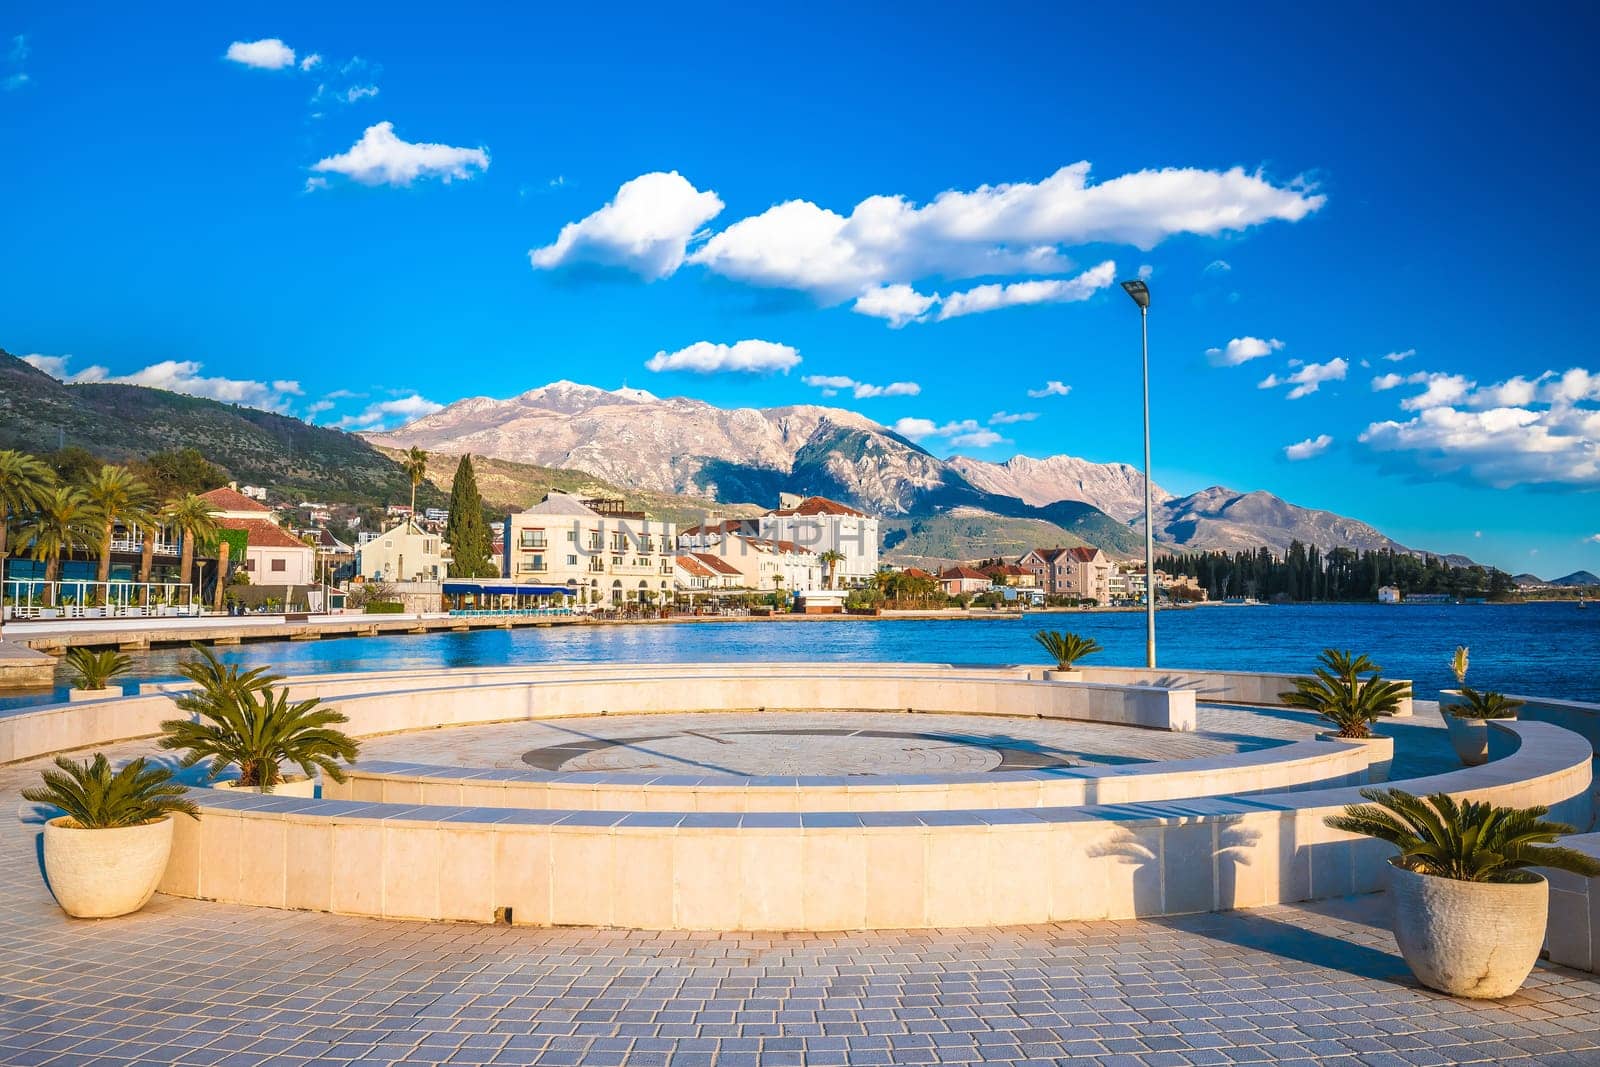 Town of Tivat scenic destination waterfront view, Montenegro coastline